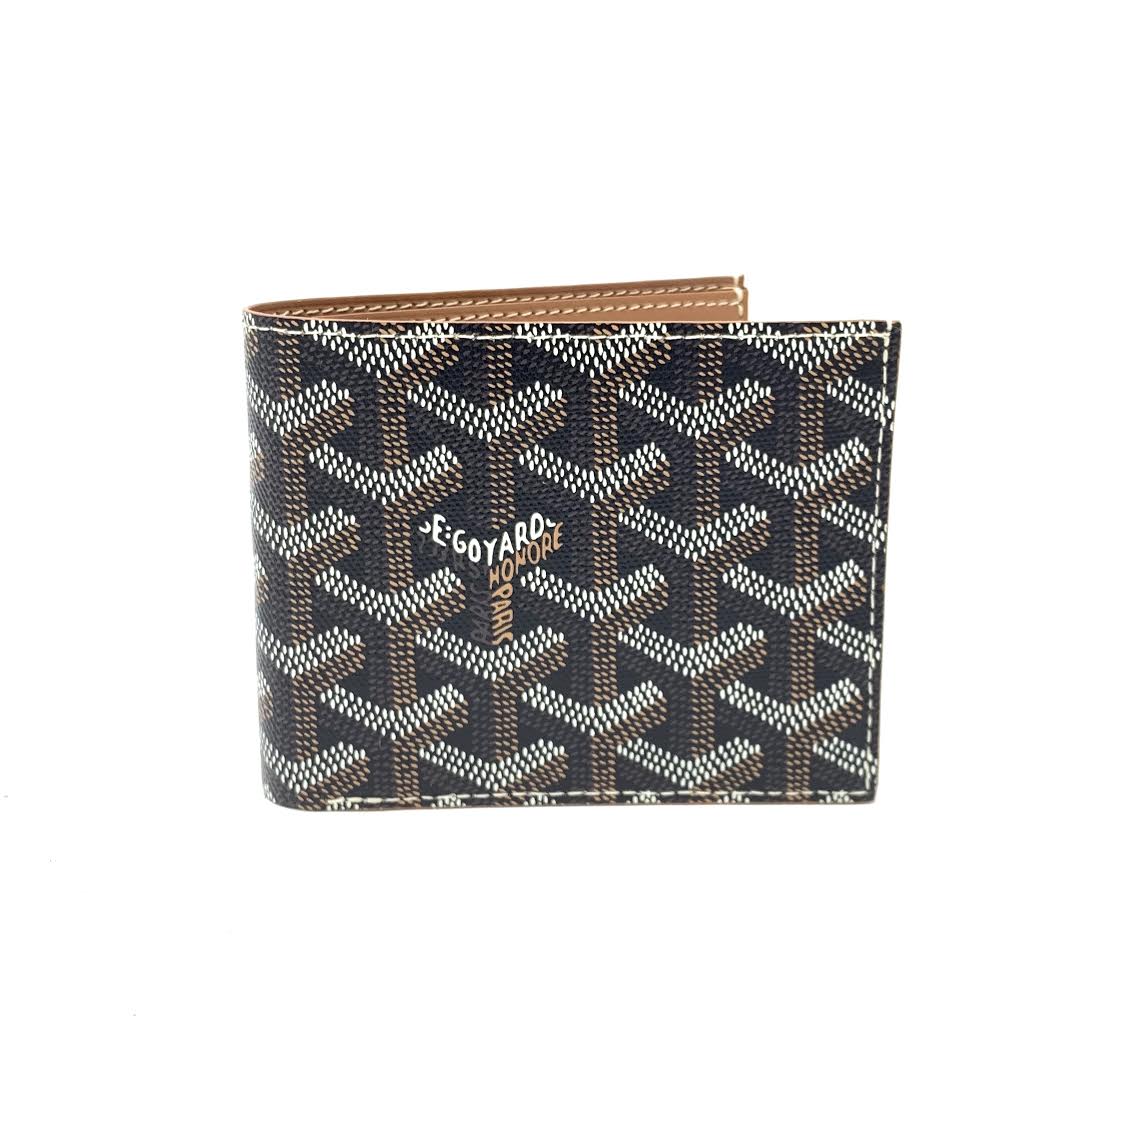 Goyard wallet St Victoire gray wallet Shipped same - Depop